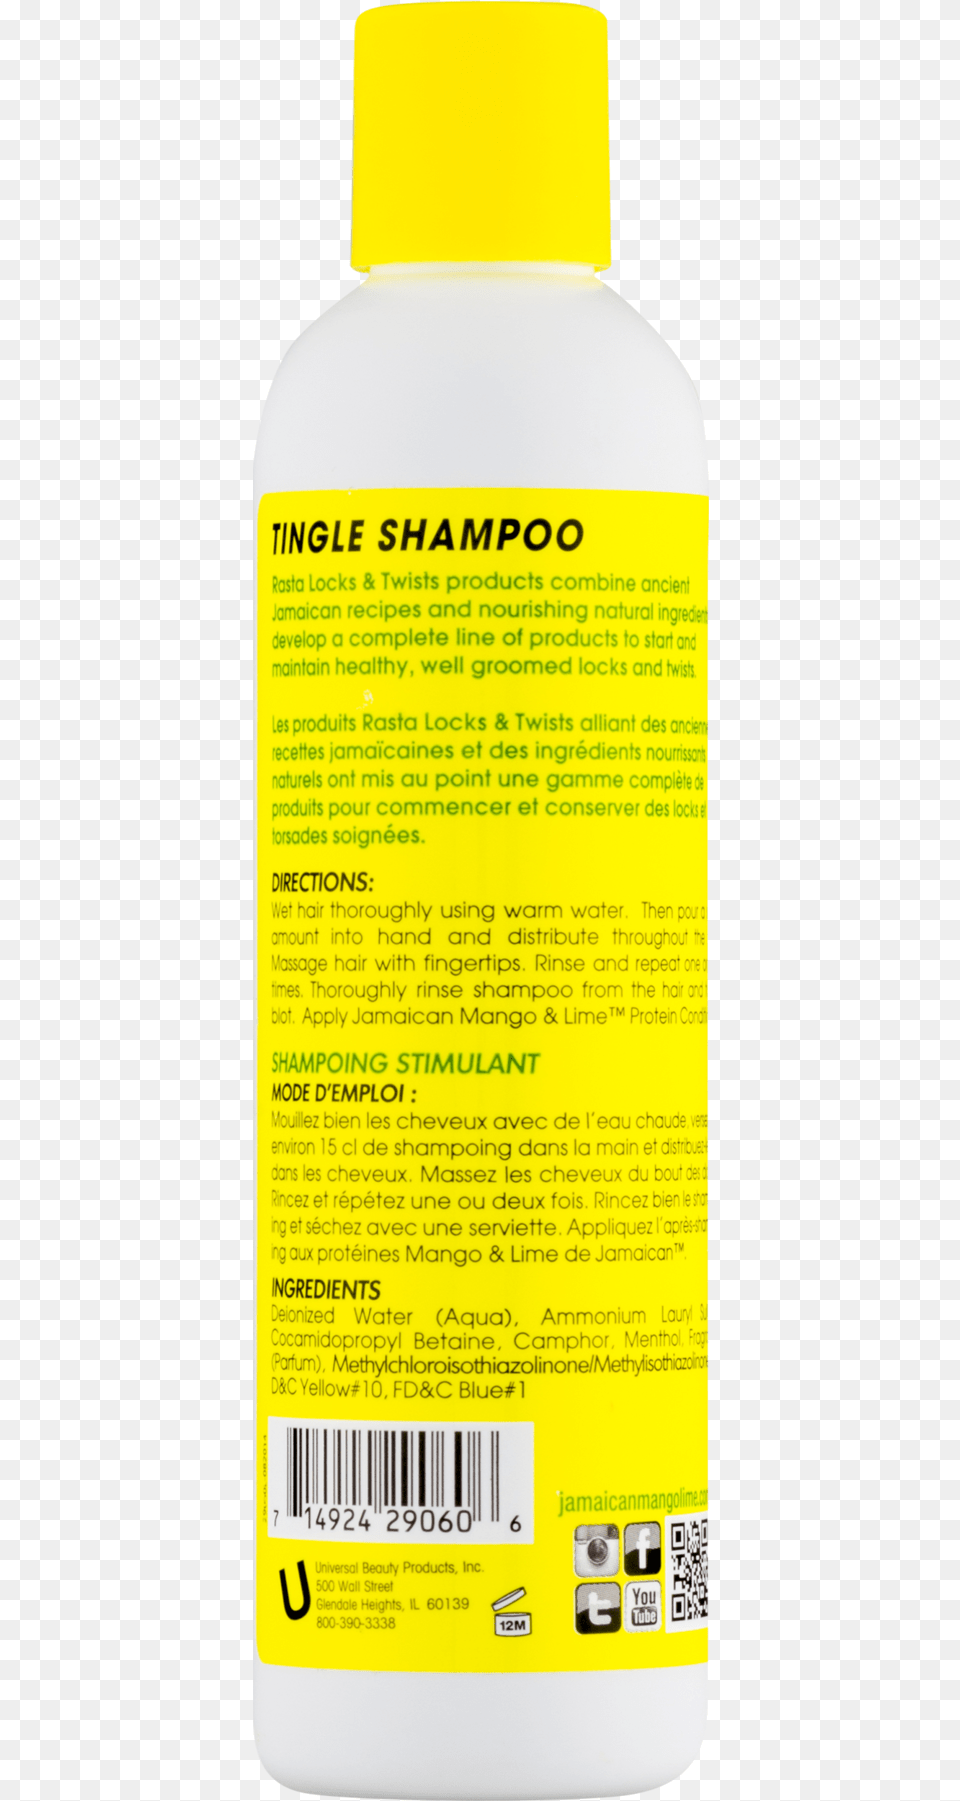 Rasta Locks Amp Twist Jamaican Mango Amp Lime Tingle Shampoo Plastic Bottle, Qr Code, Cosmetics Free Png